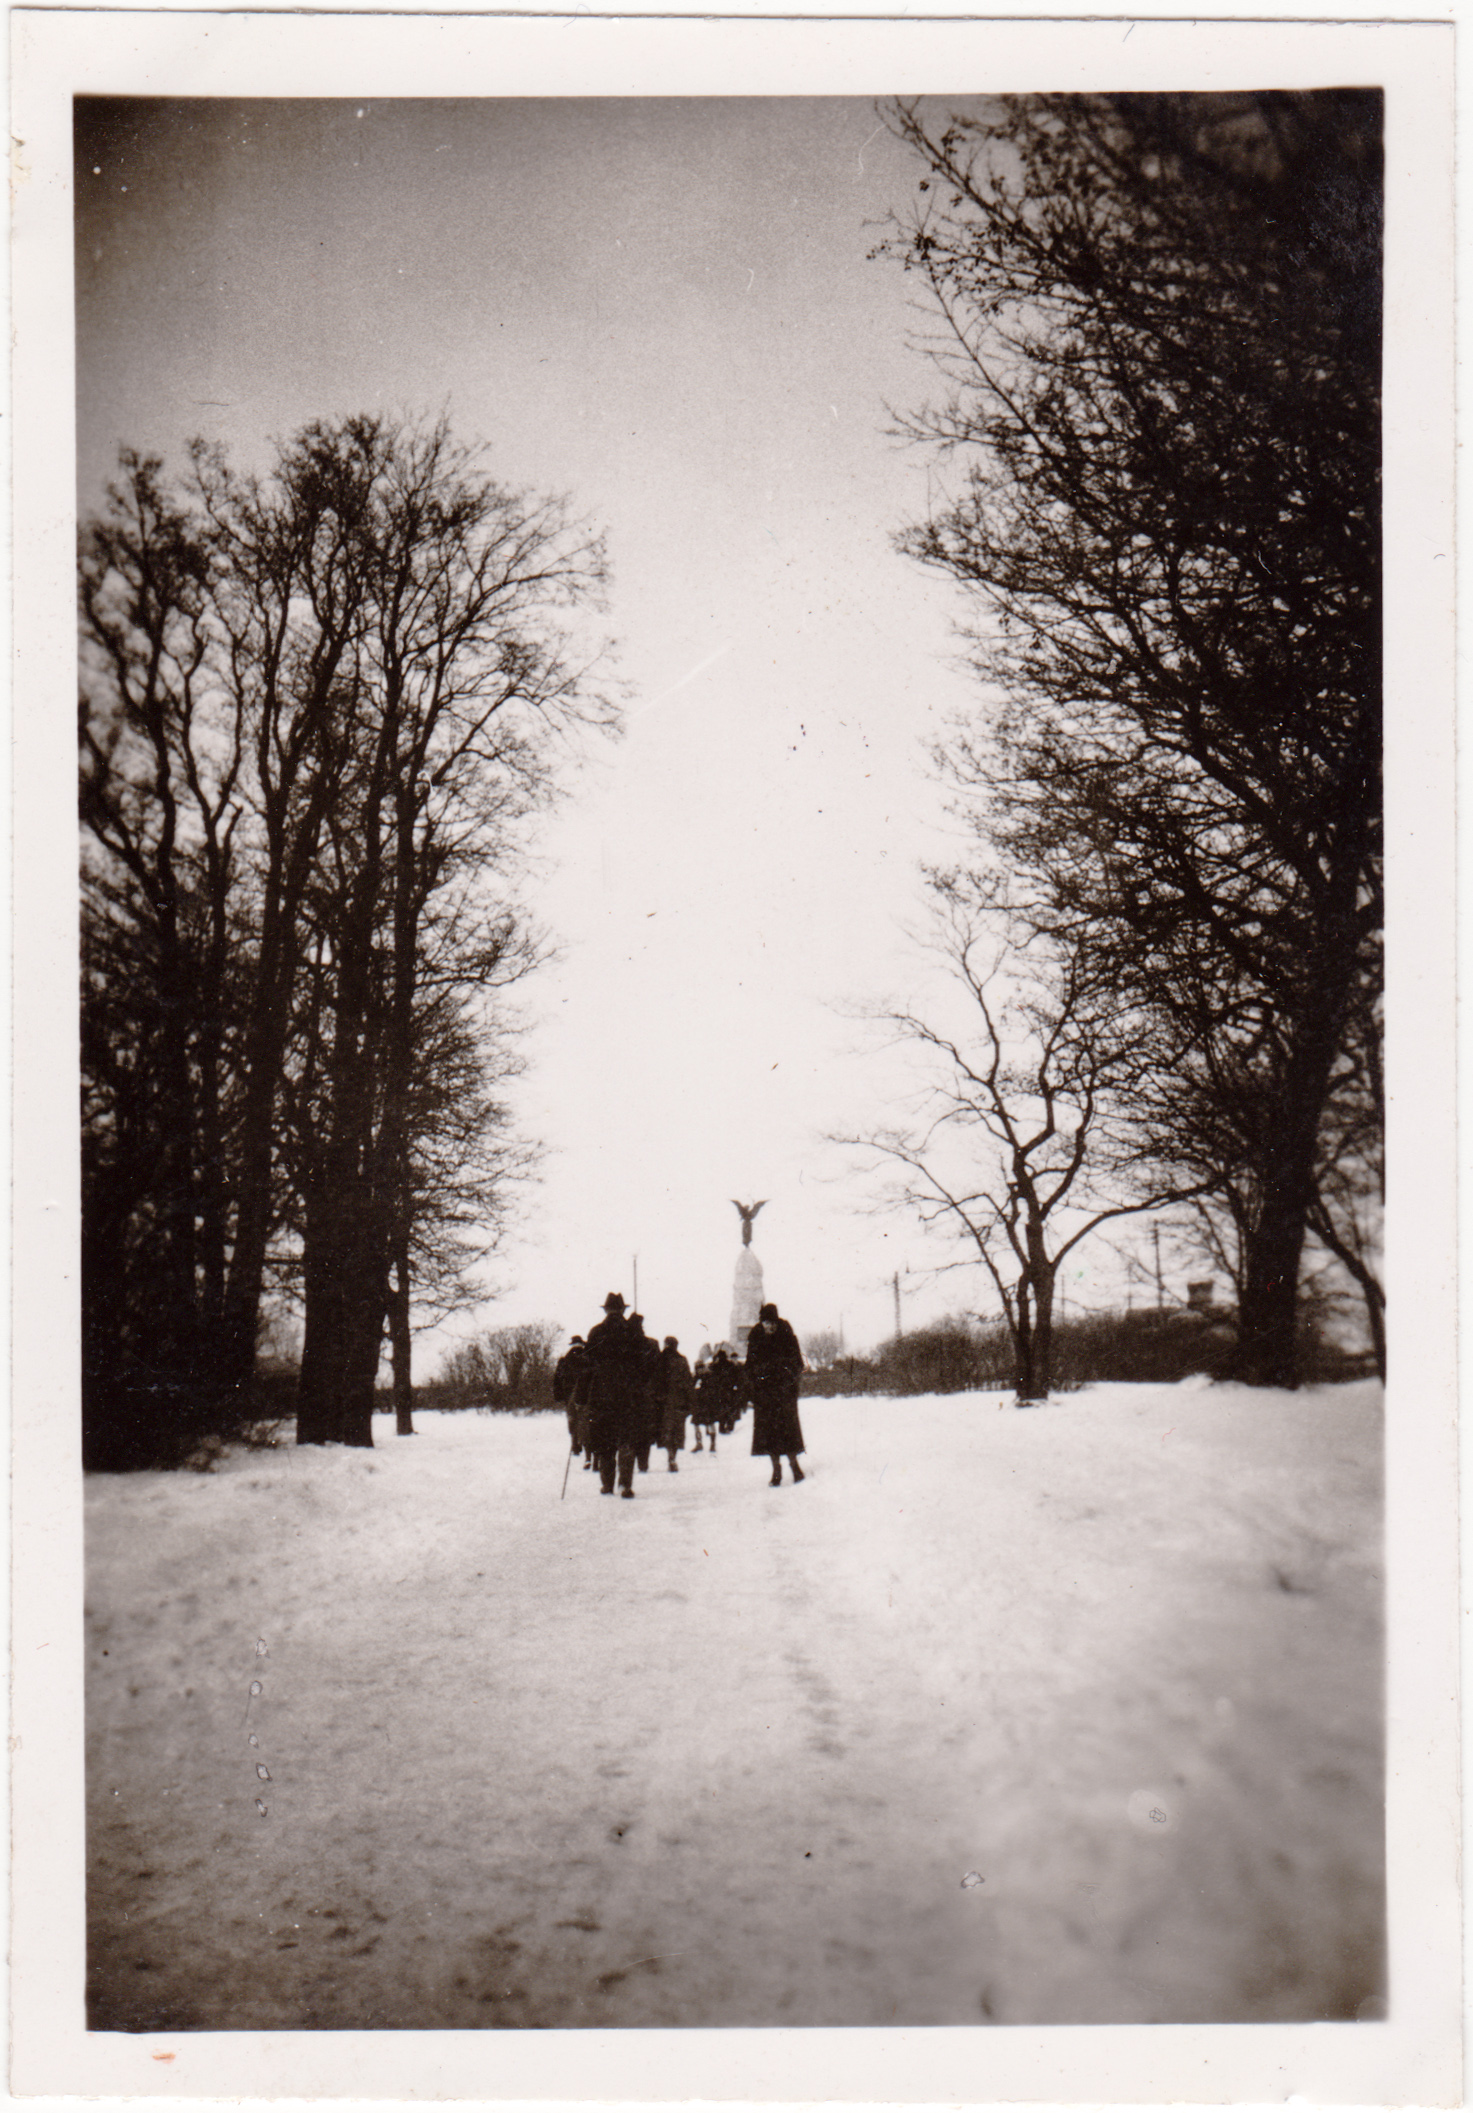 Tallinn, Kadrioru Park, Russalka, March 1940